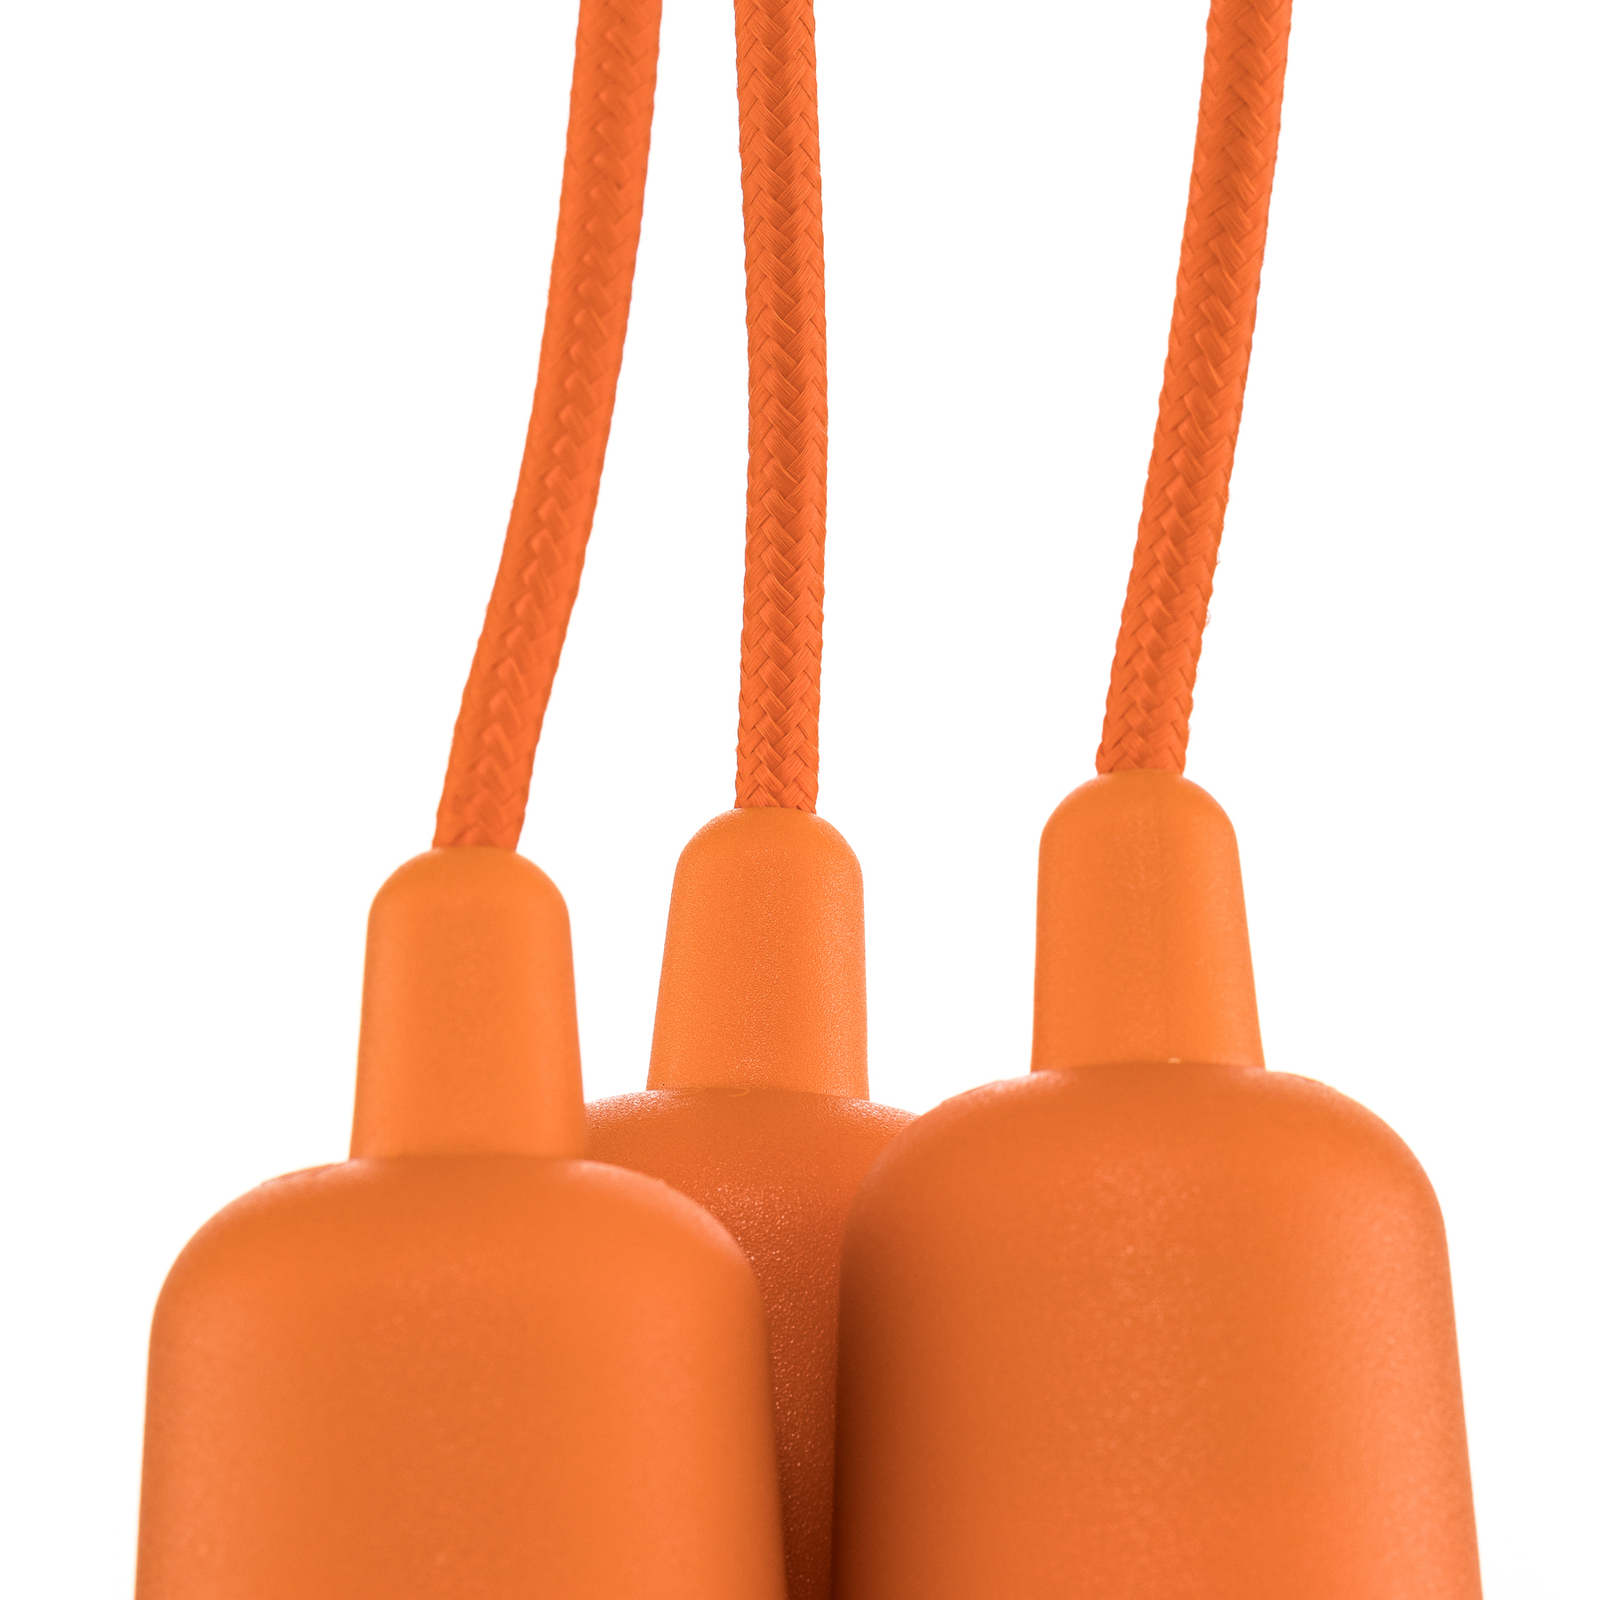 Suspension Brasil orange à trois lampes